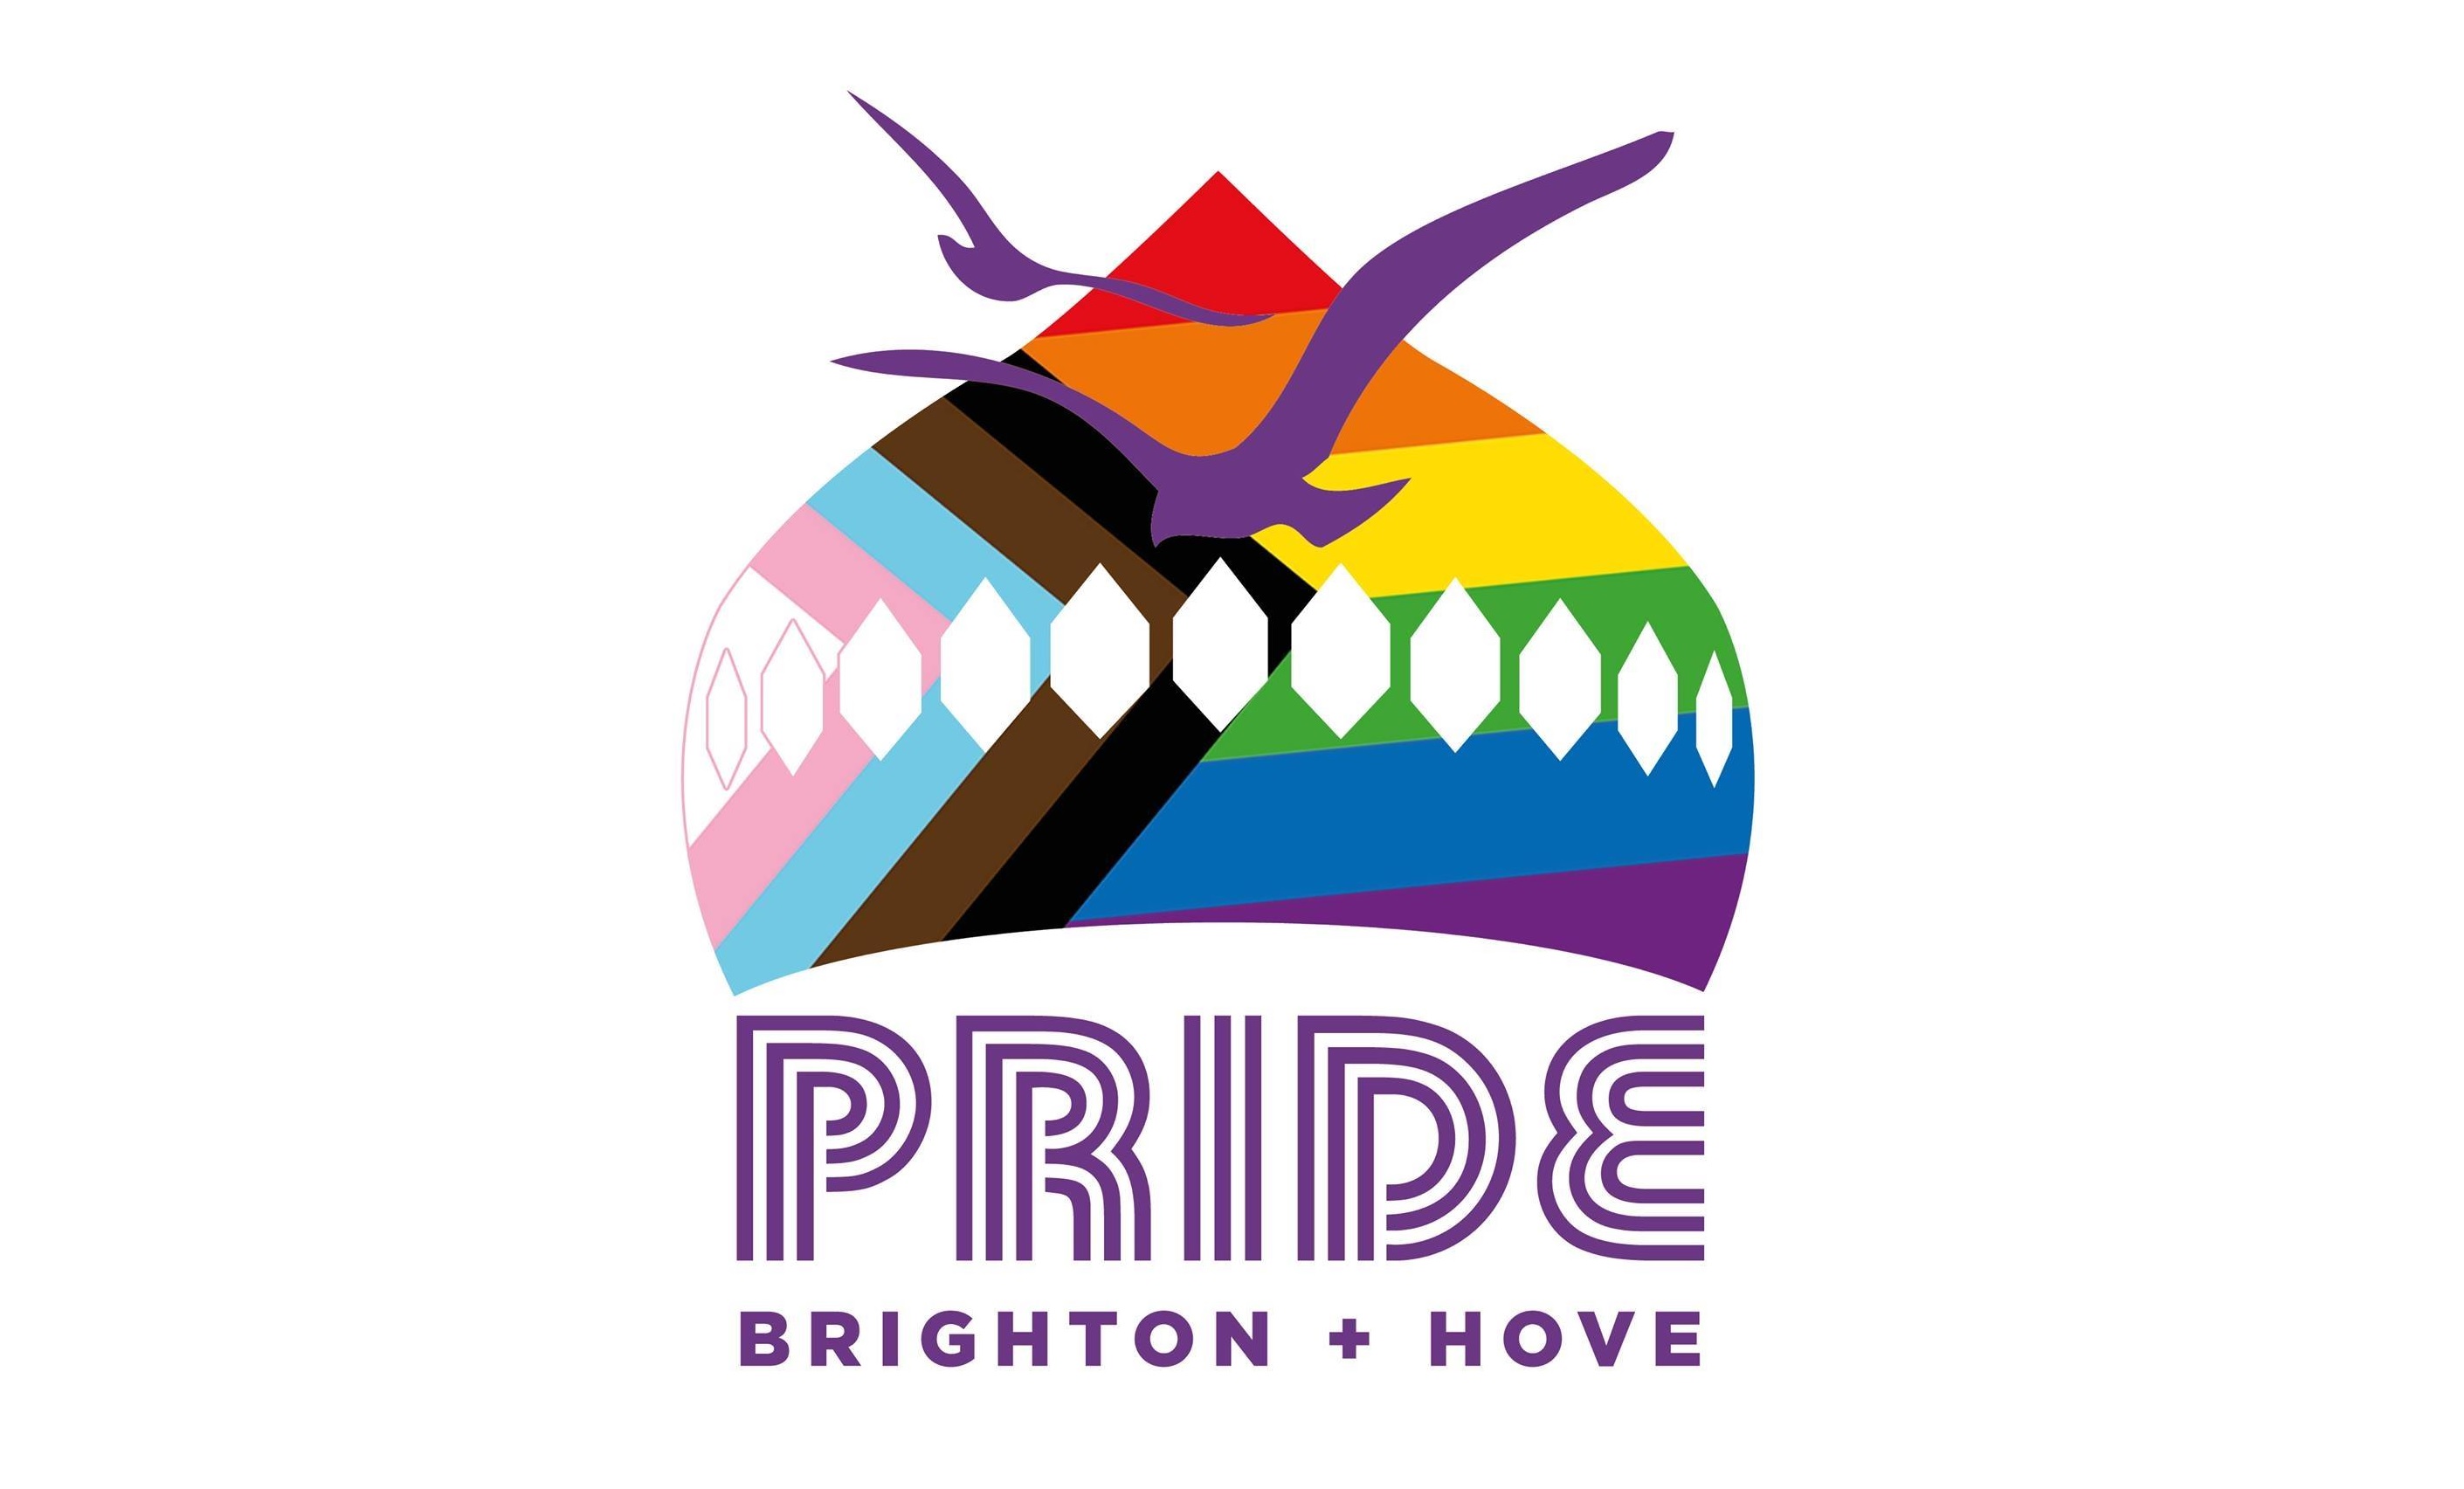 Christina Aguilera confirmed as headliner at Brighton & Hove Pride